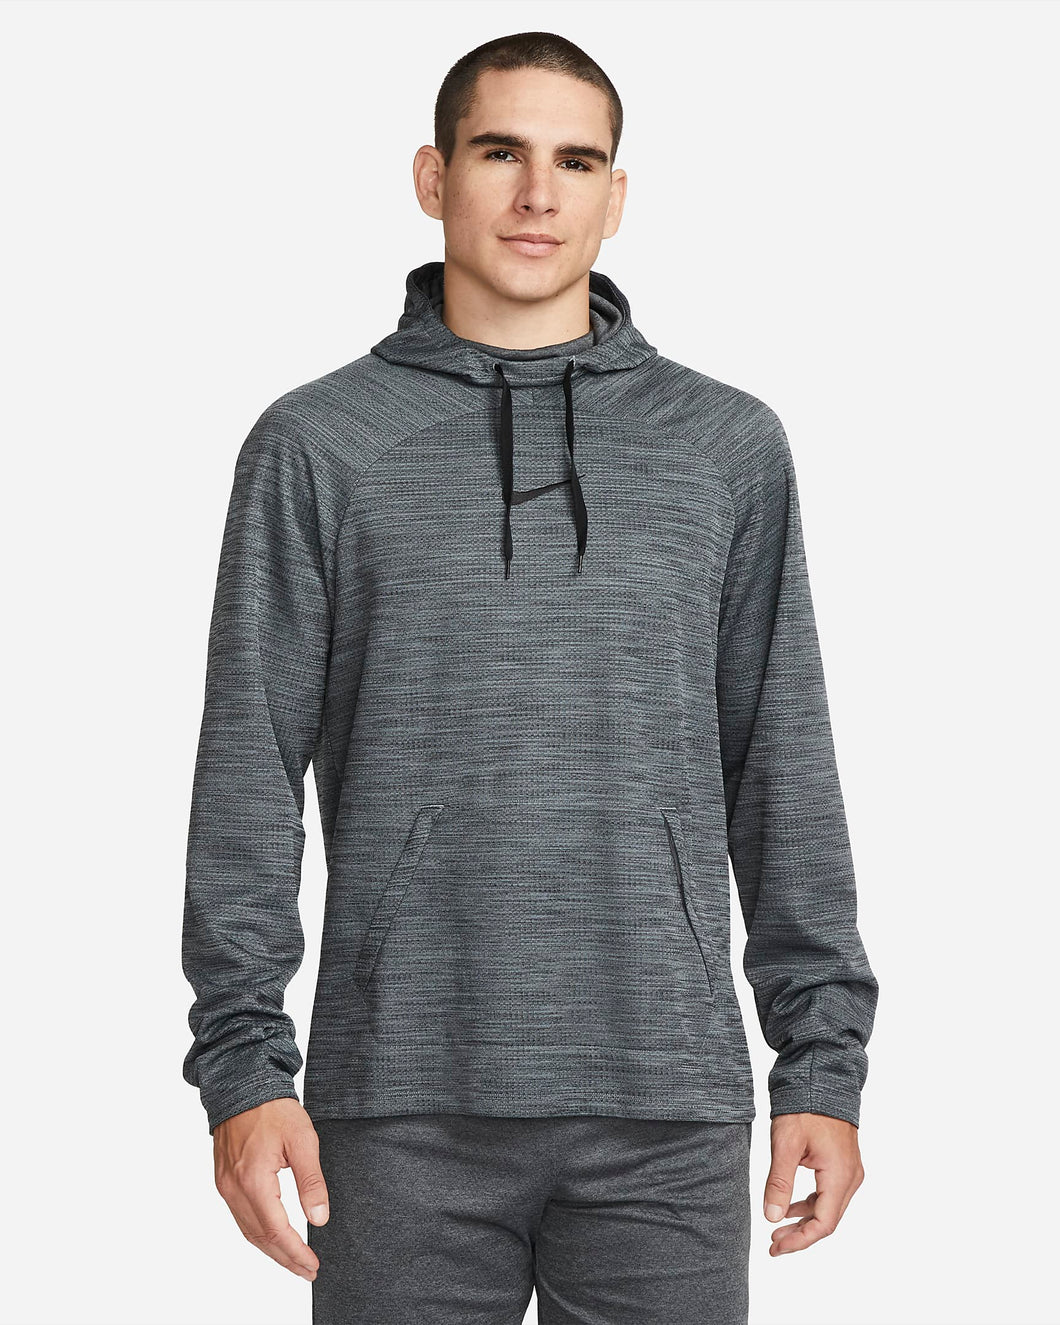 Nike Men's Dri-FIT Long-Sleeve Hooded Soccer Top